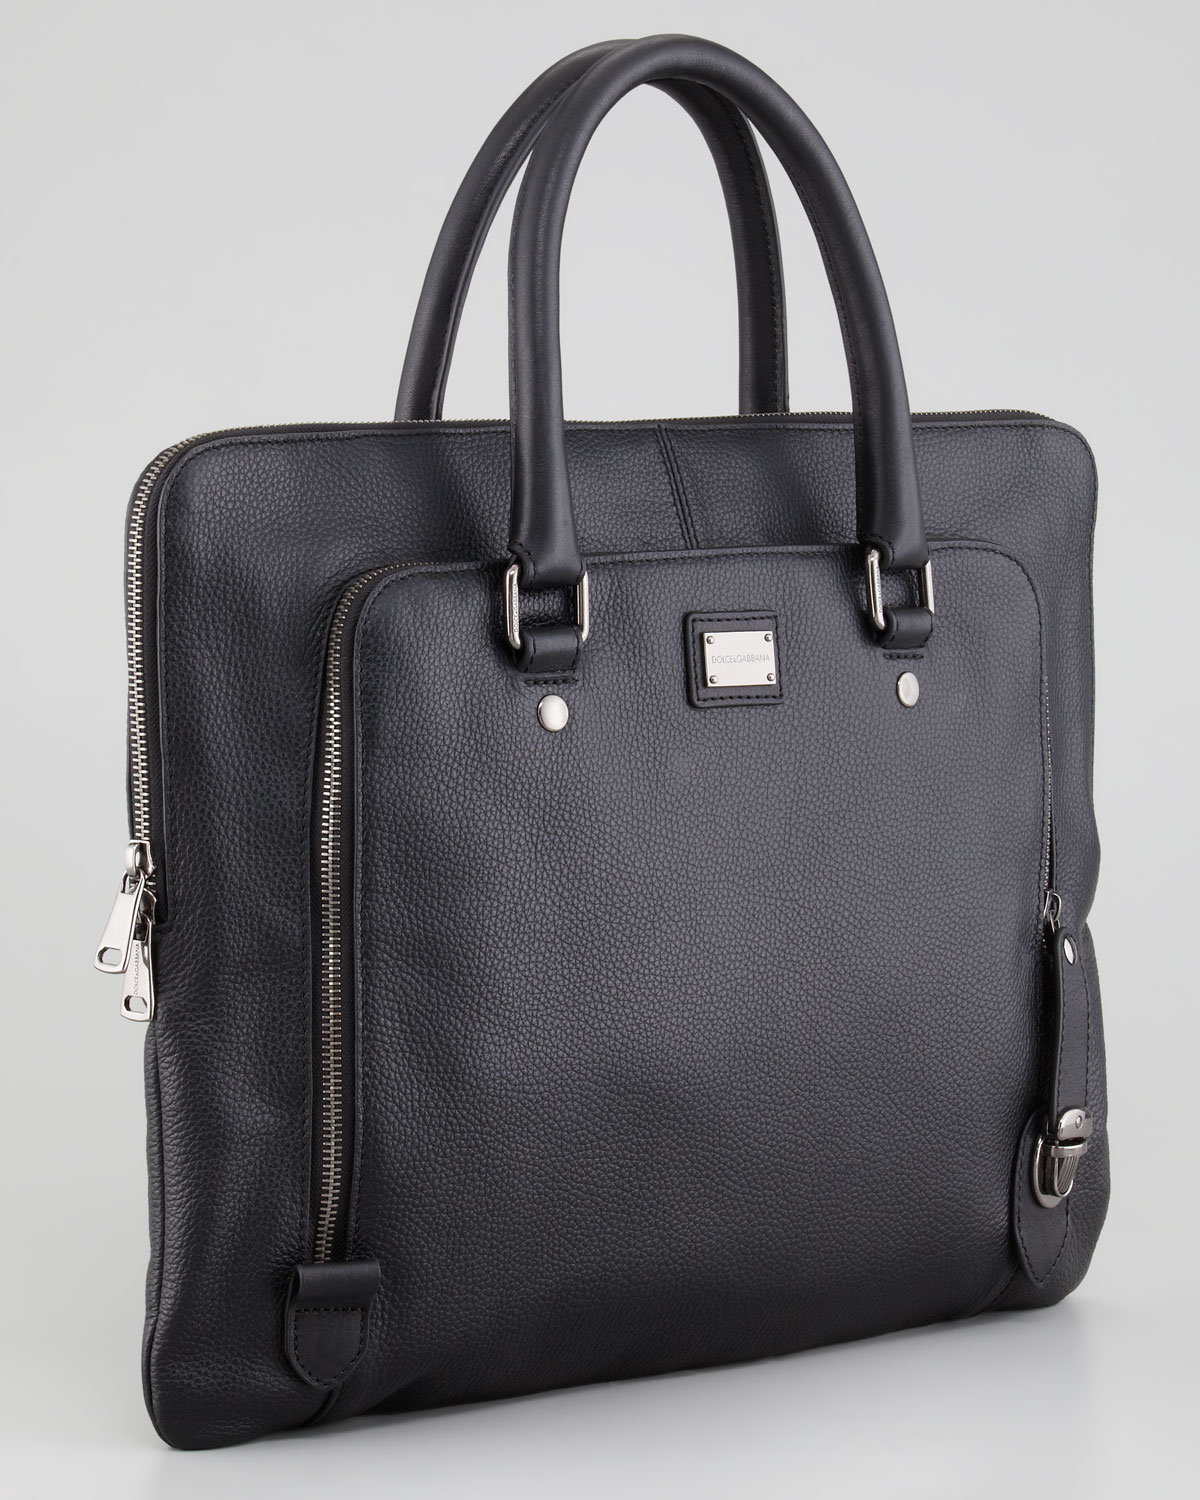 Dolce & Gabbana Leather Zip Portfolio Bag in Black for Men - Lyst